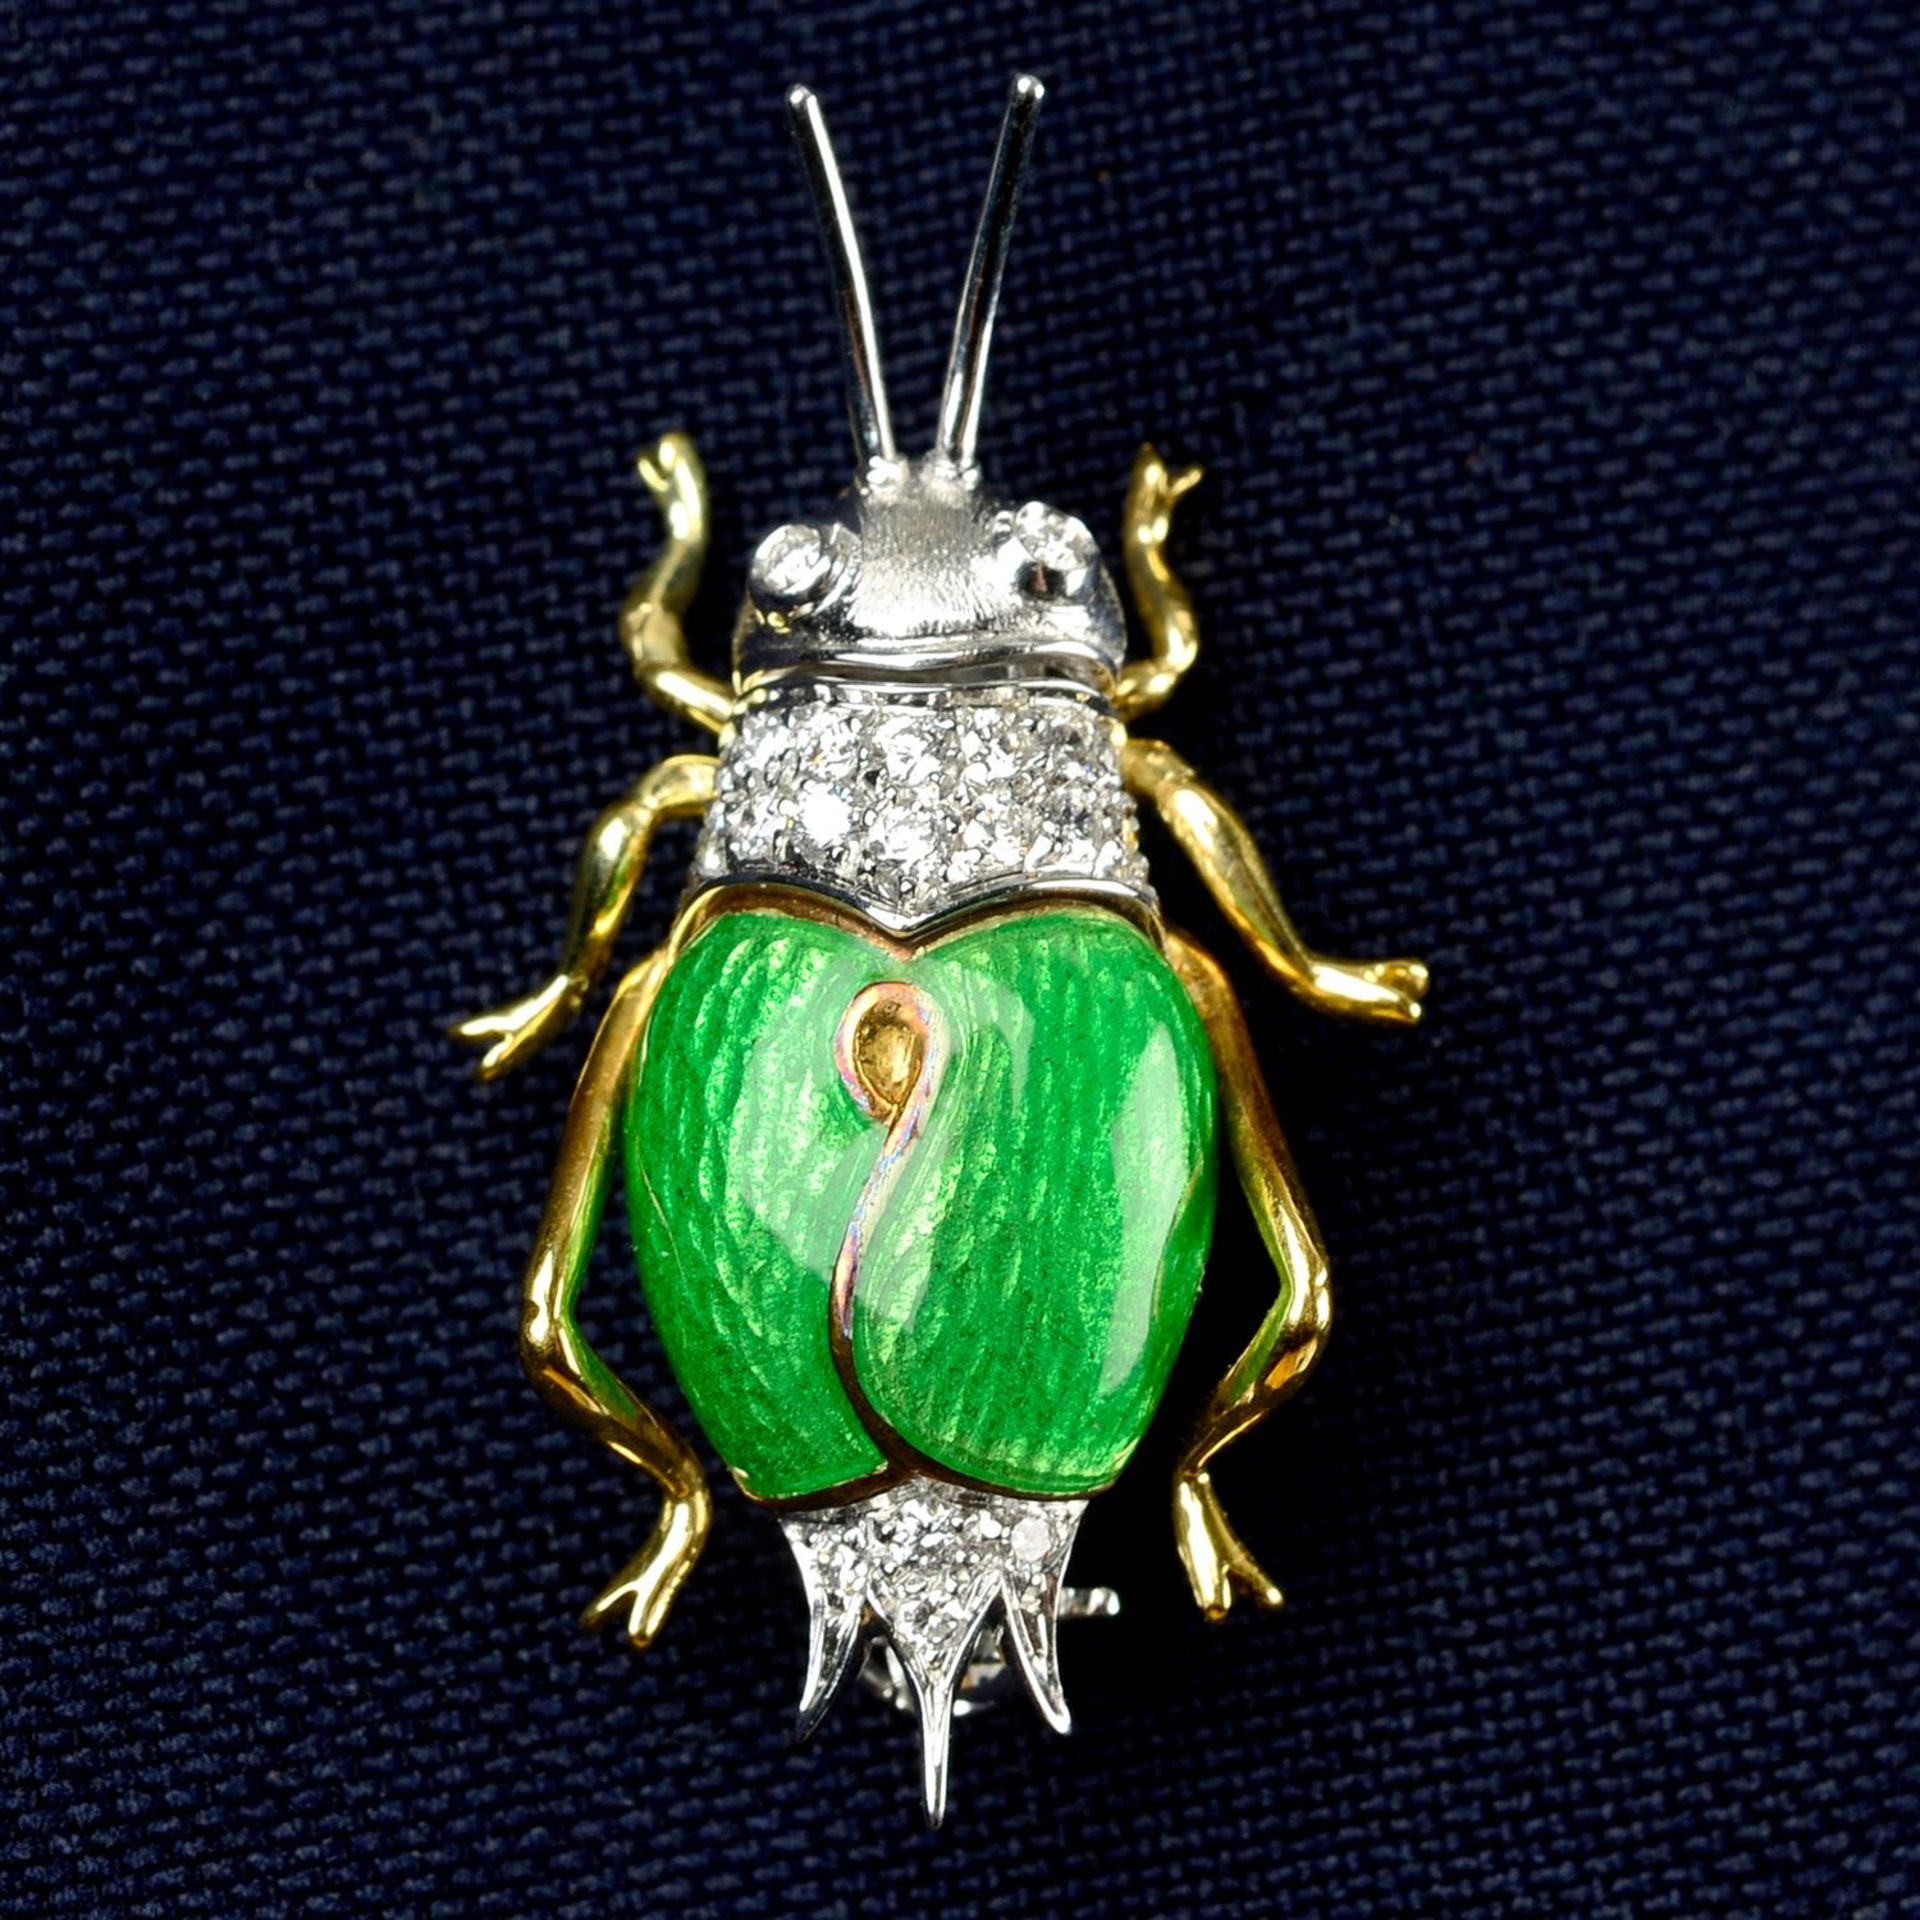 A diamond and green enamel grasshopper brooch, by Gioielli.